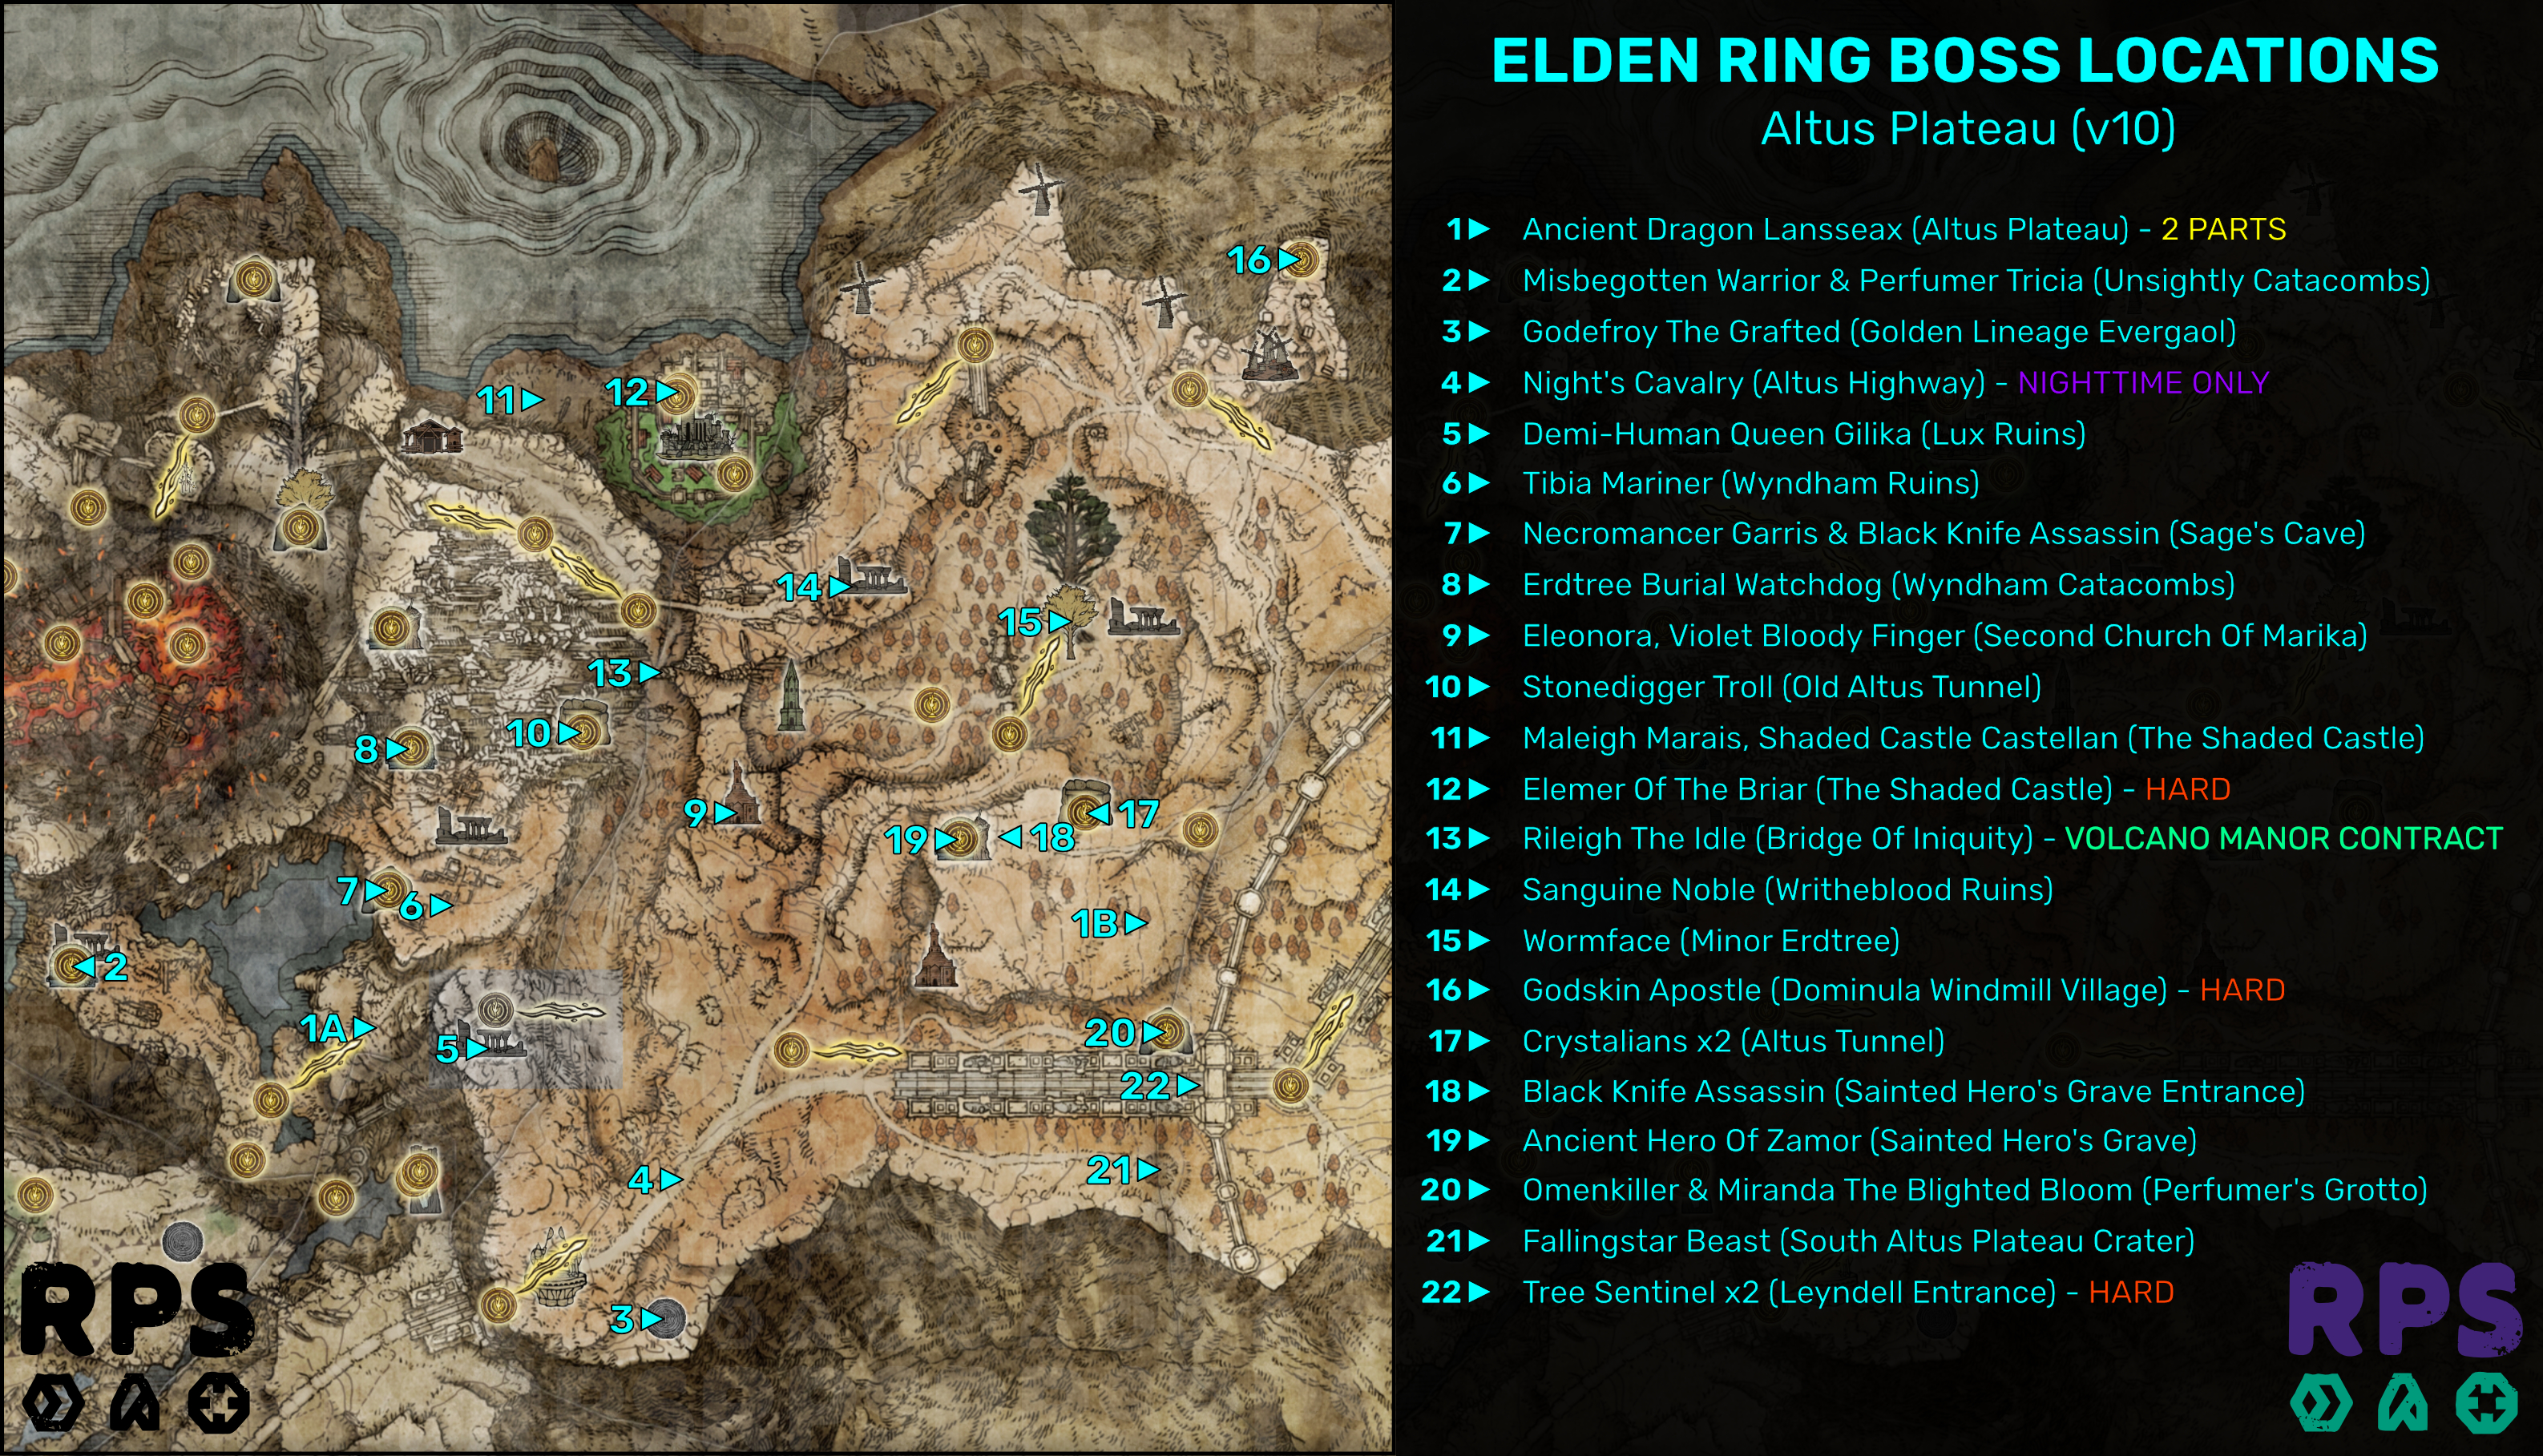 Elden Ring boss locations and ideal boss order   Rock Paper Shotgun